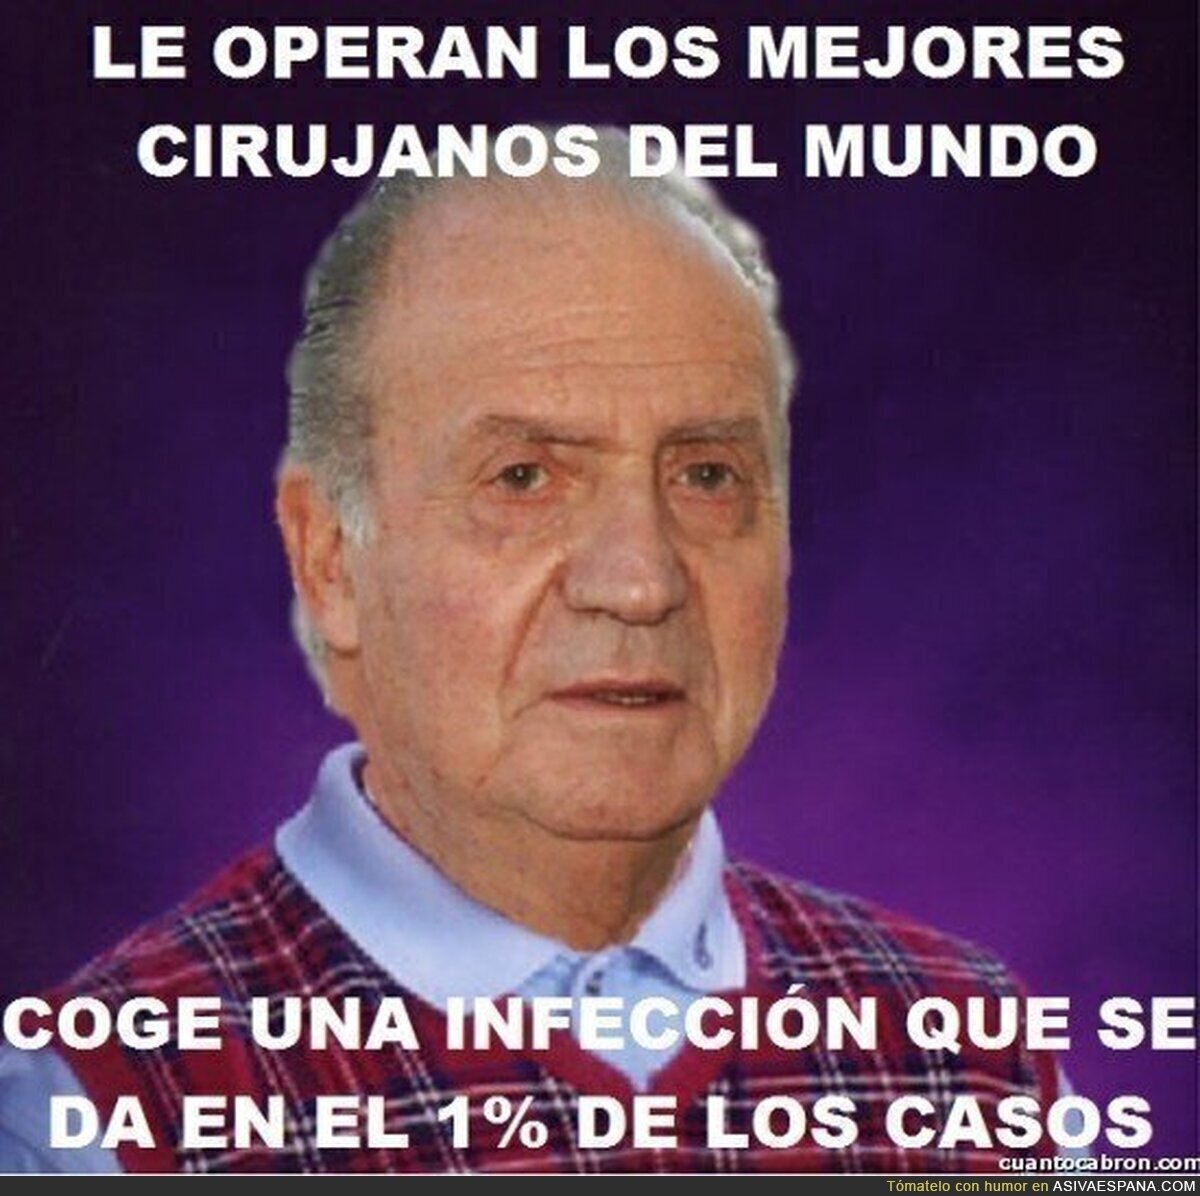 Bad luck Juan Carlos I